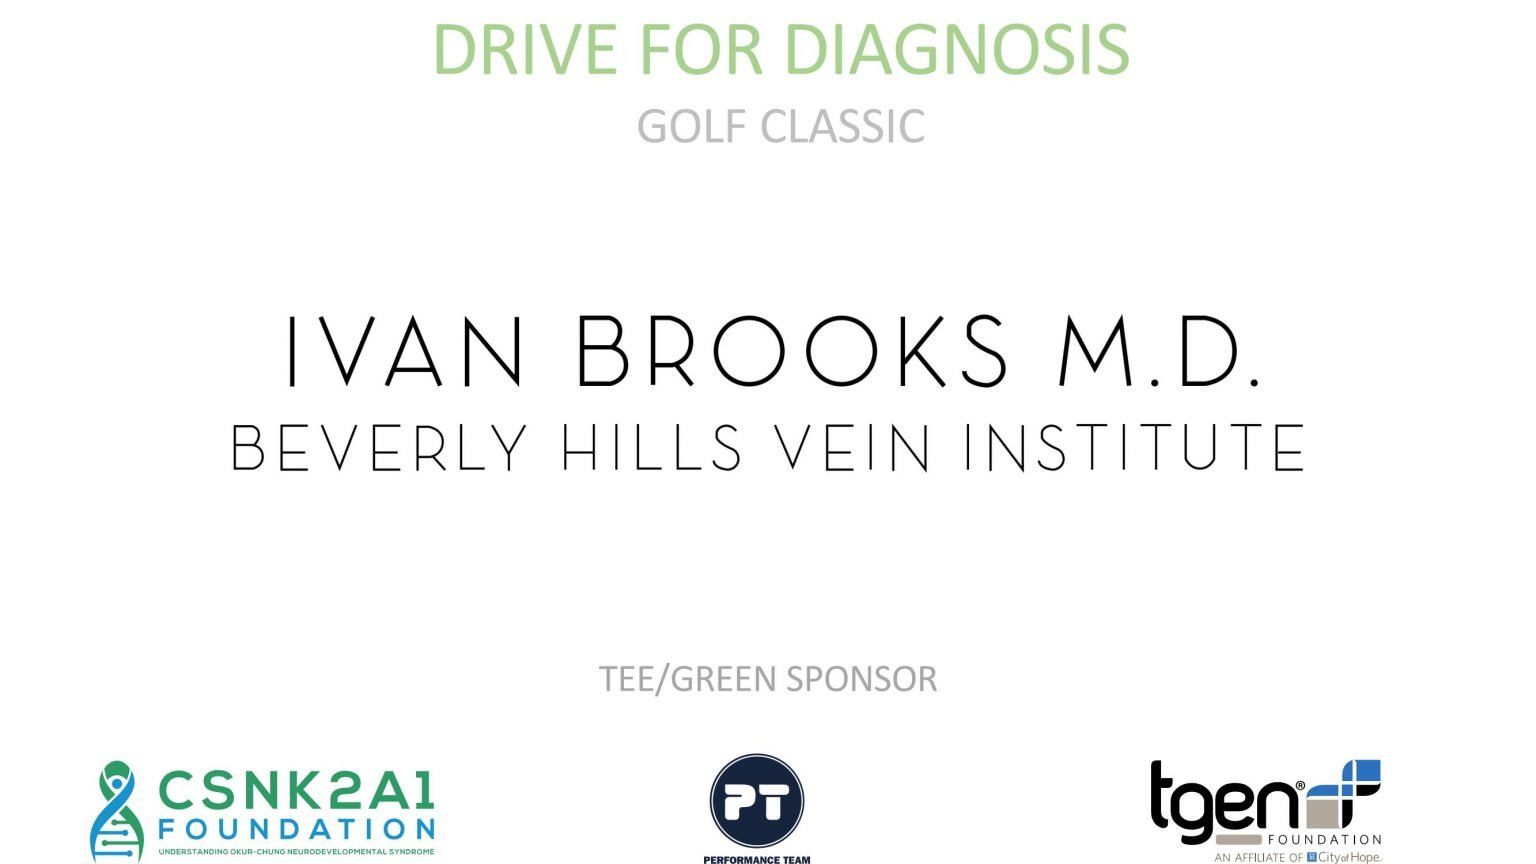 Tee/Green Sponsor - Ivan Brooks M.D. Beverly Hills Vein Institute